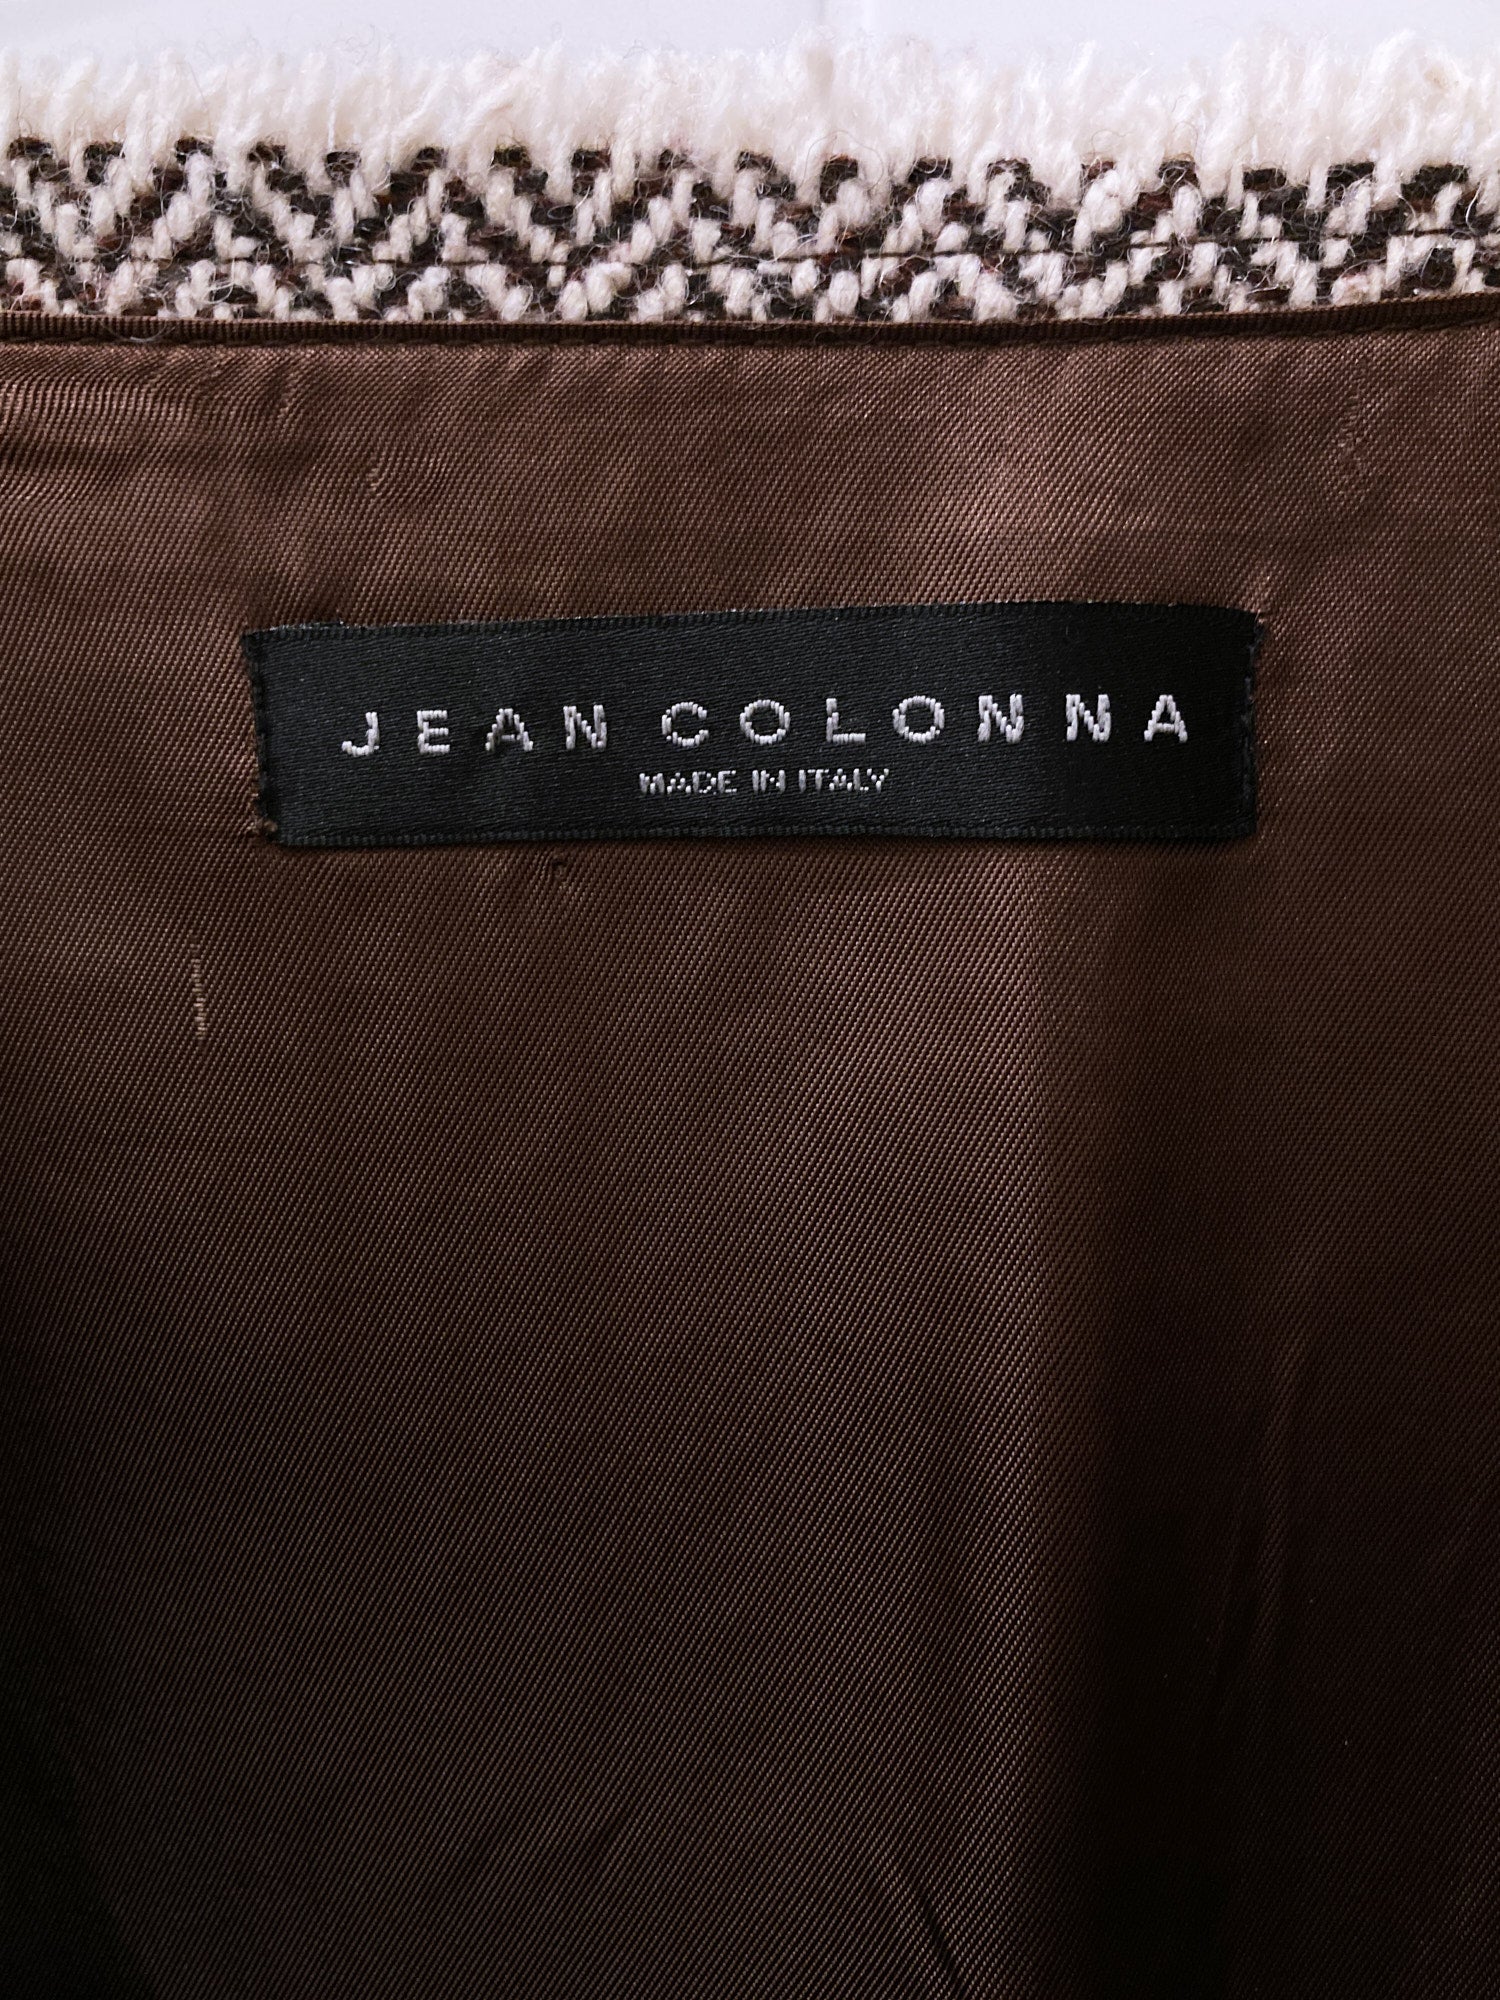 Jean Colonna brown herringbone wool raw edge knee length skirt